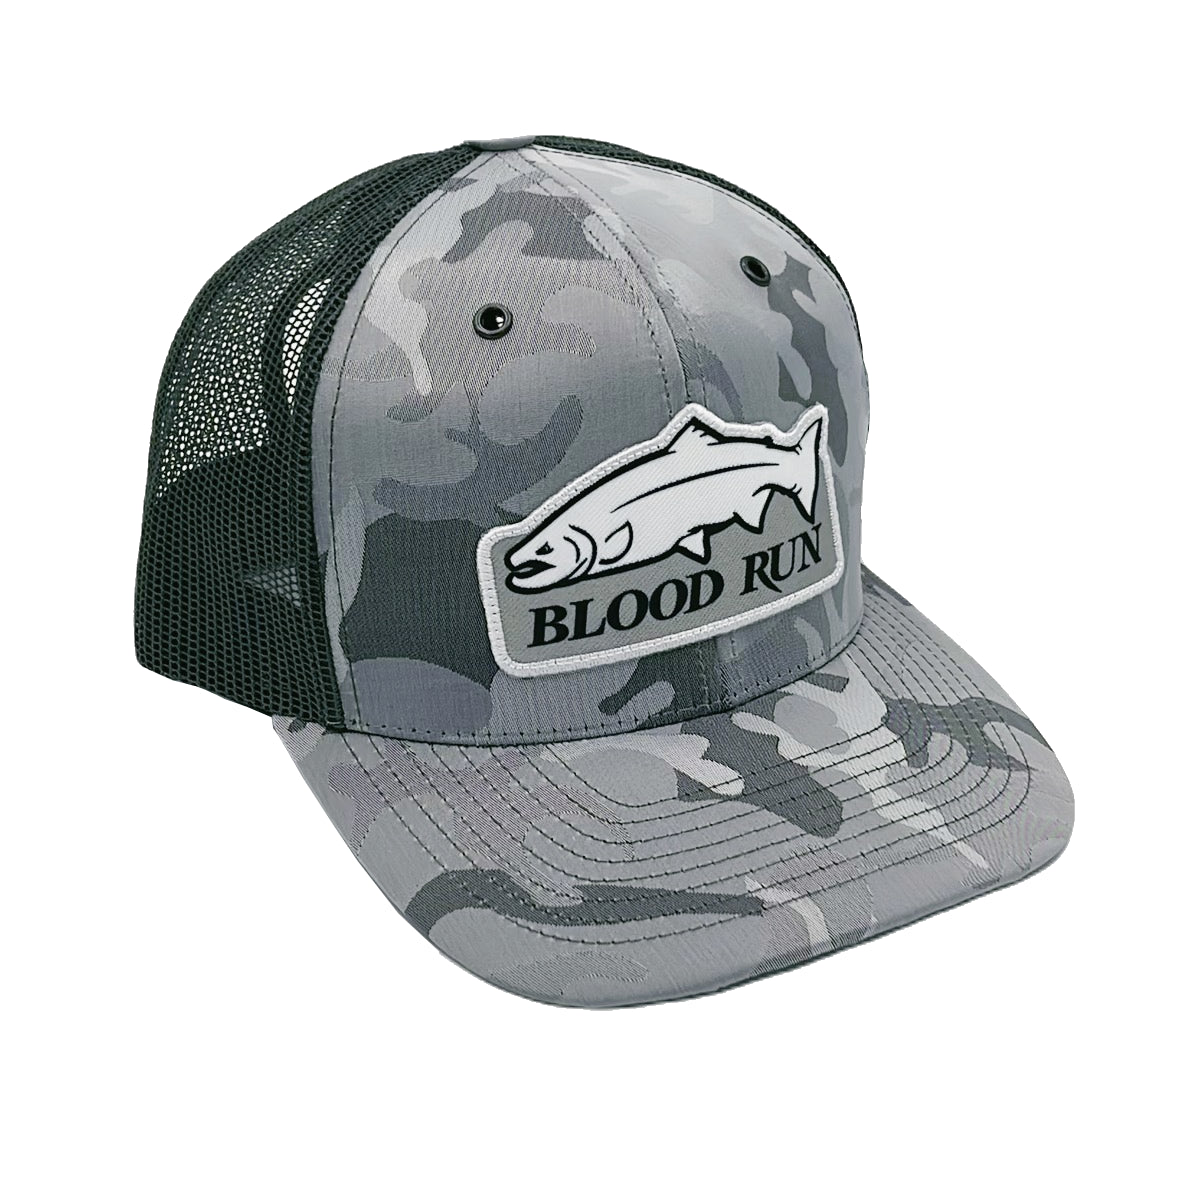 Limited Edition Custom Steelhead Fishing Hoodies from Blood Run – Blood Run  Fishing